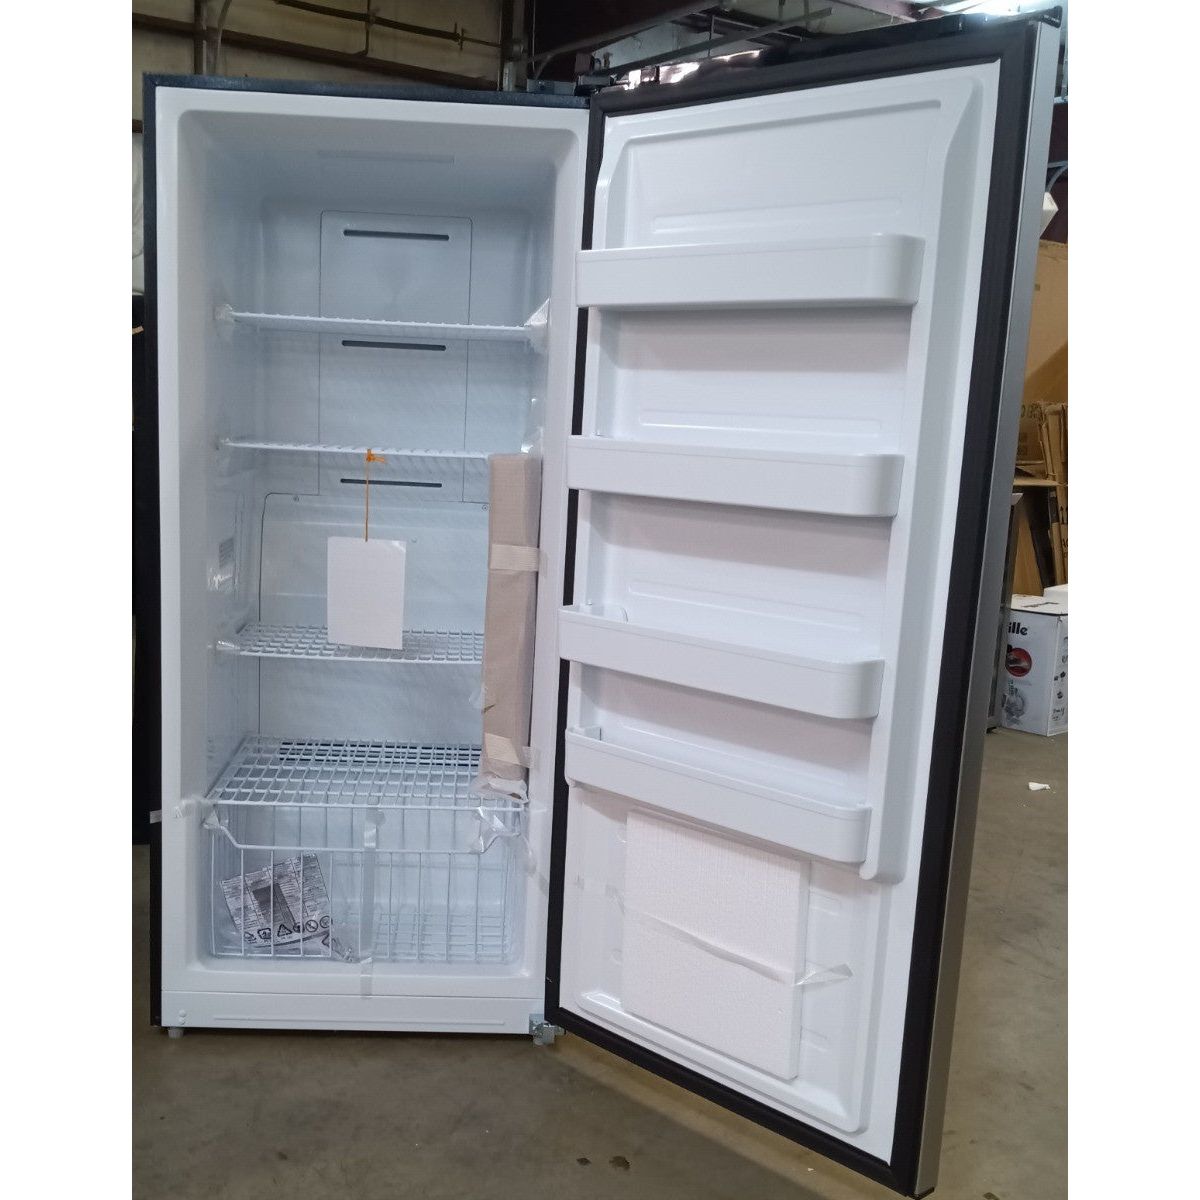 Whynter 13.8 CF Convertible Upright Deep Freezer, Refrigerator UDF-139SS